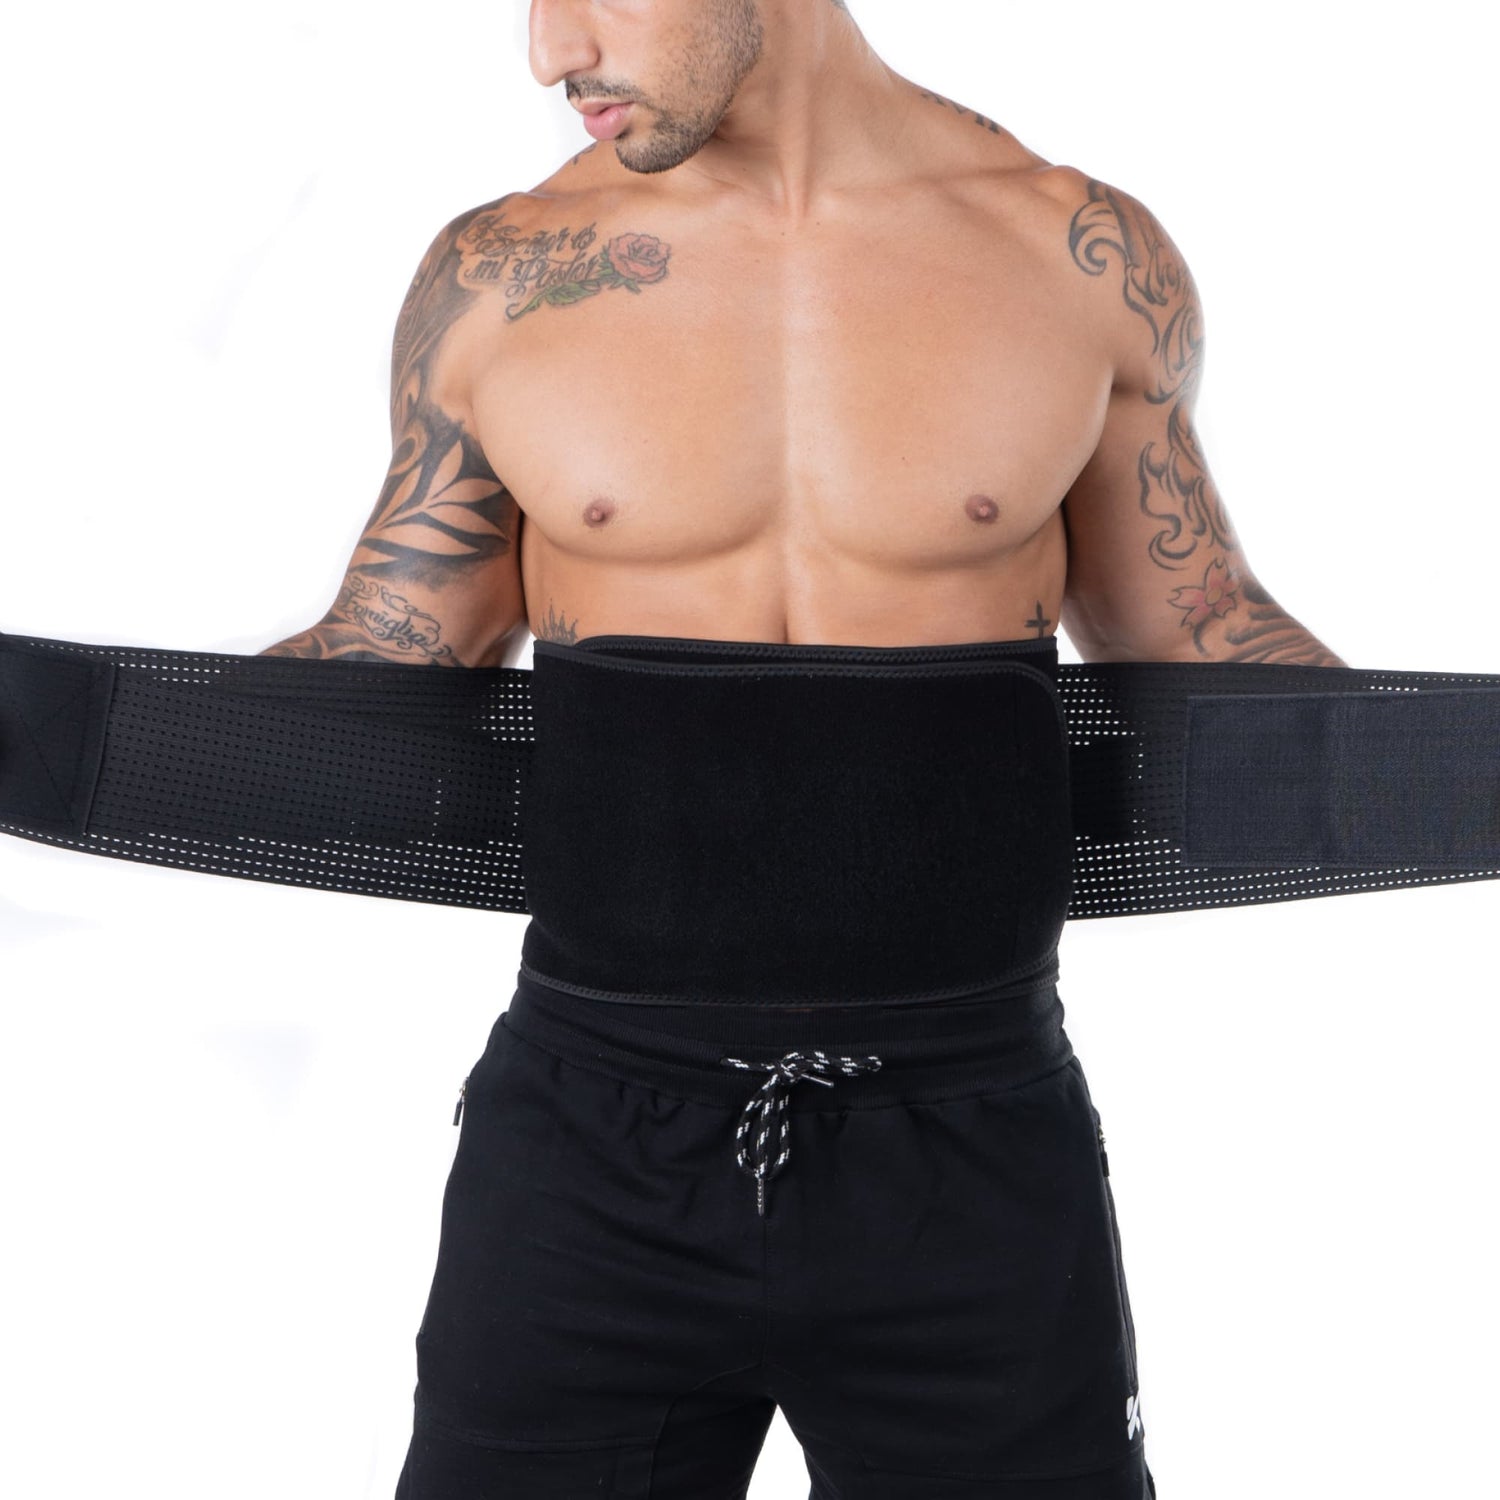 Hot Belt Power New Body Shaper Sport Waist Trainer Lumbar Support Lower  Back Brace Belt - China Xtreme Power Belt and Fitness Hot Belt price